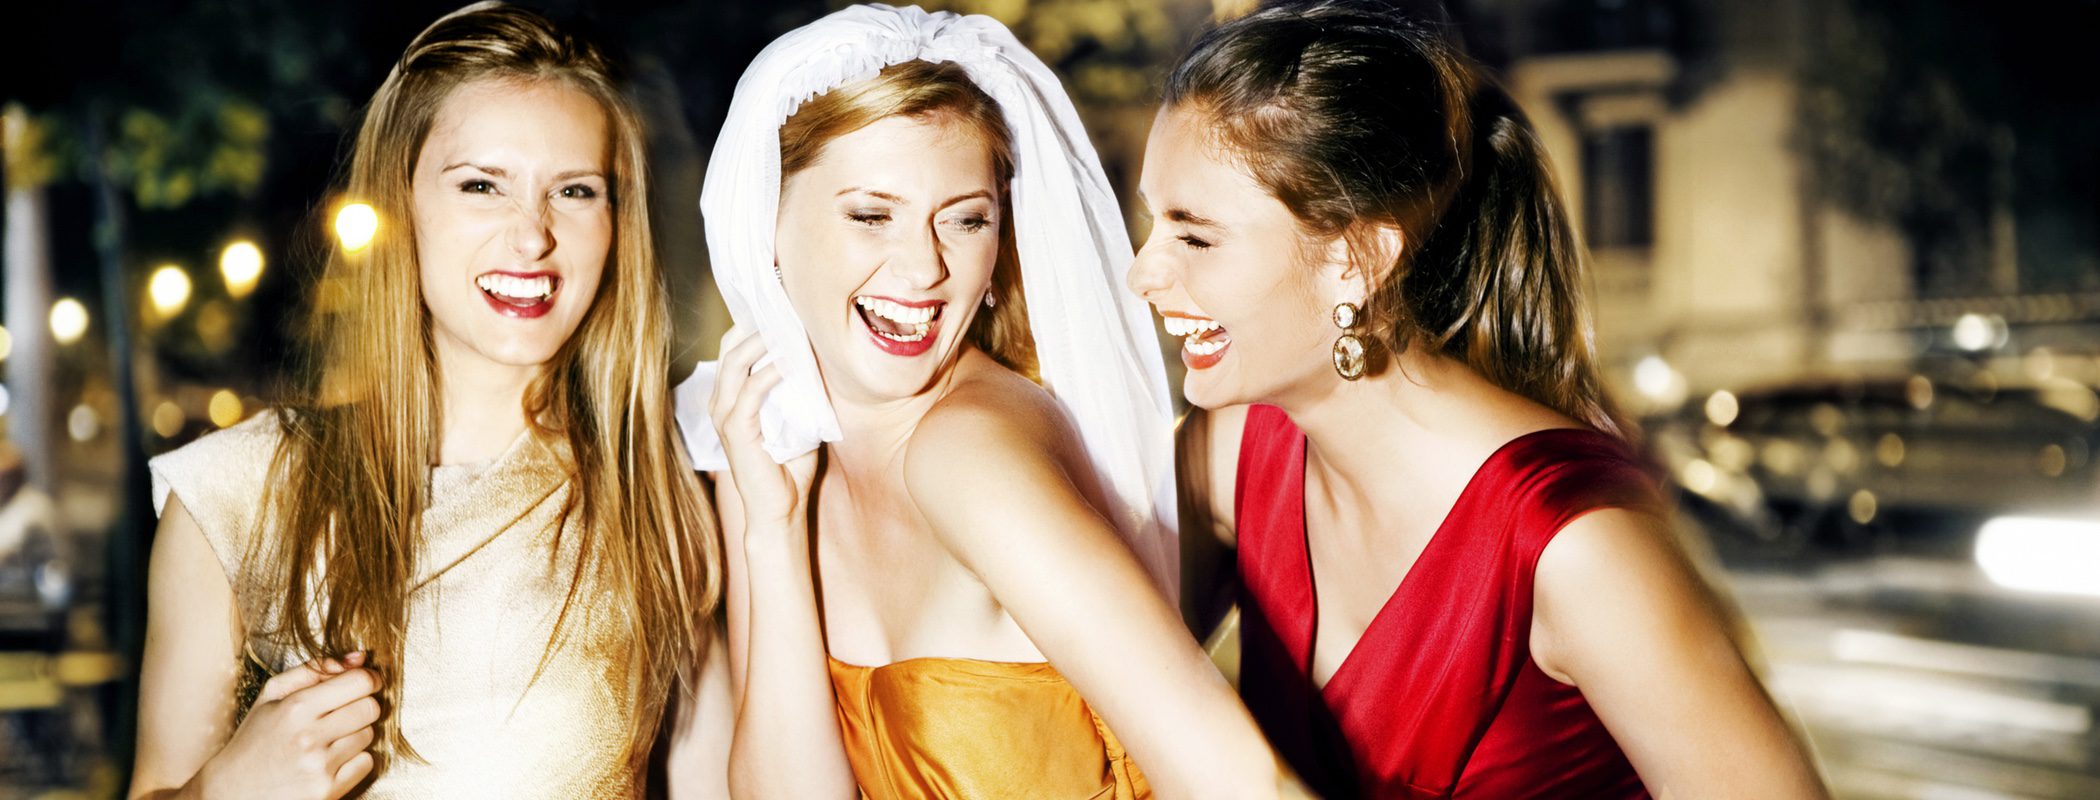 Despedida de soltera: planes para divertirte antes de tu boda